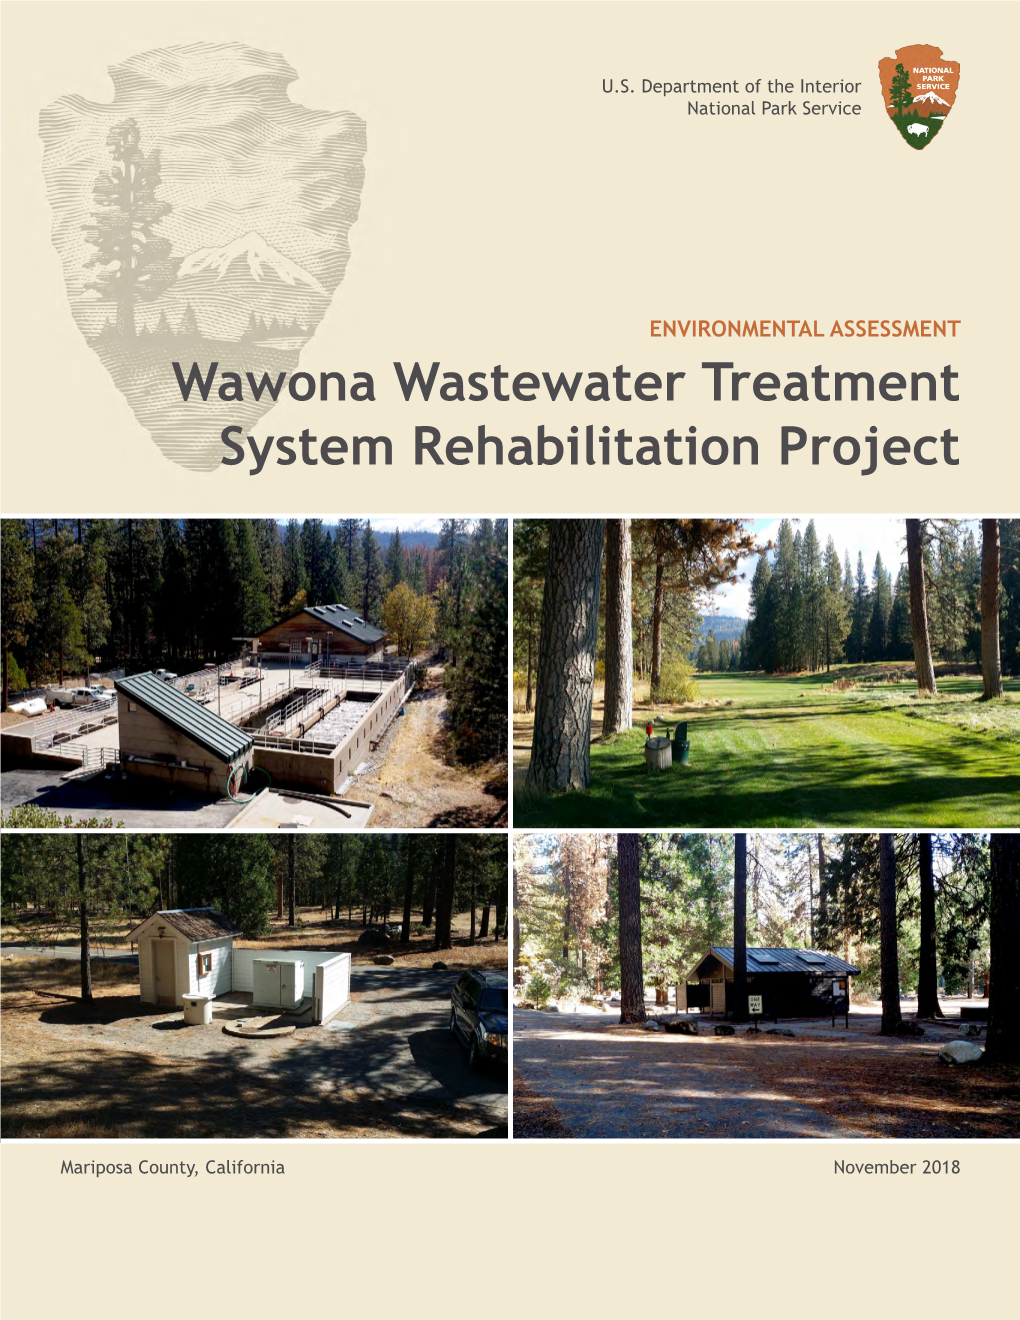 Wawona Wastewater Treatment System Rehabilitation Plan Environmental Assessment